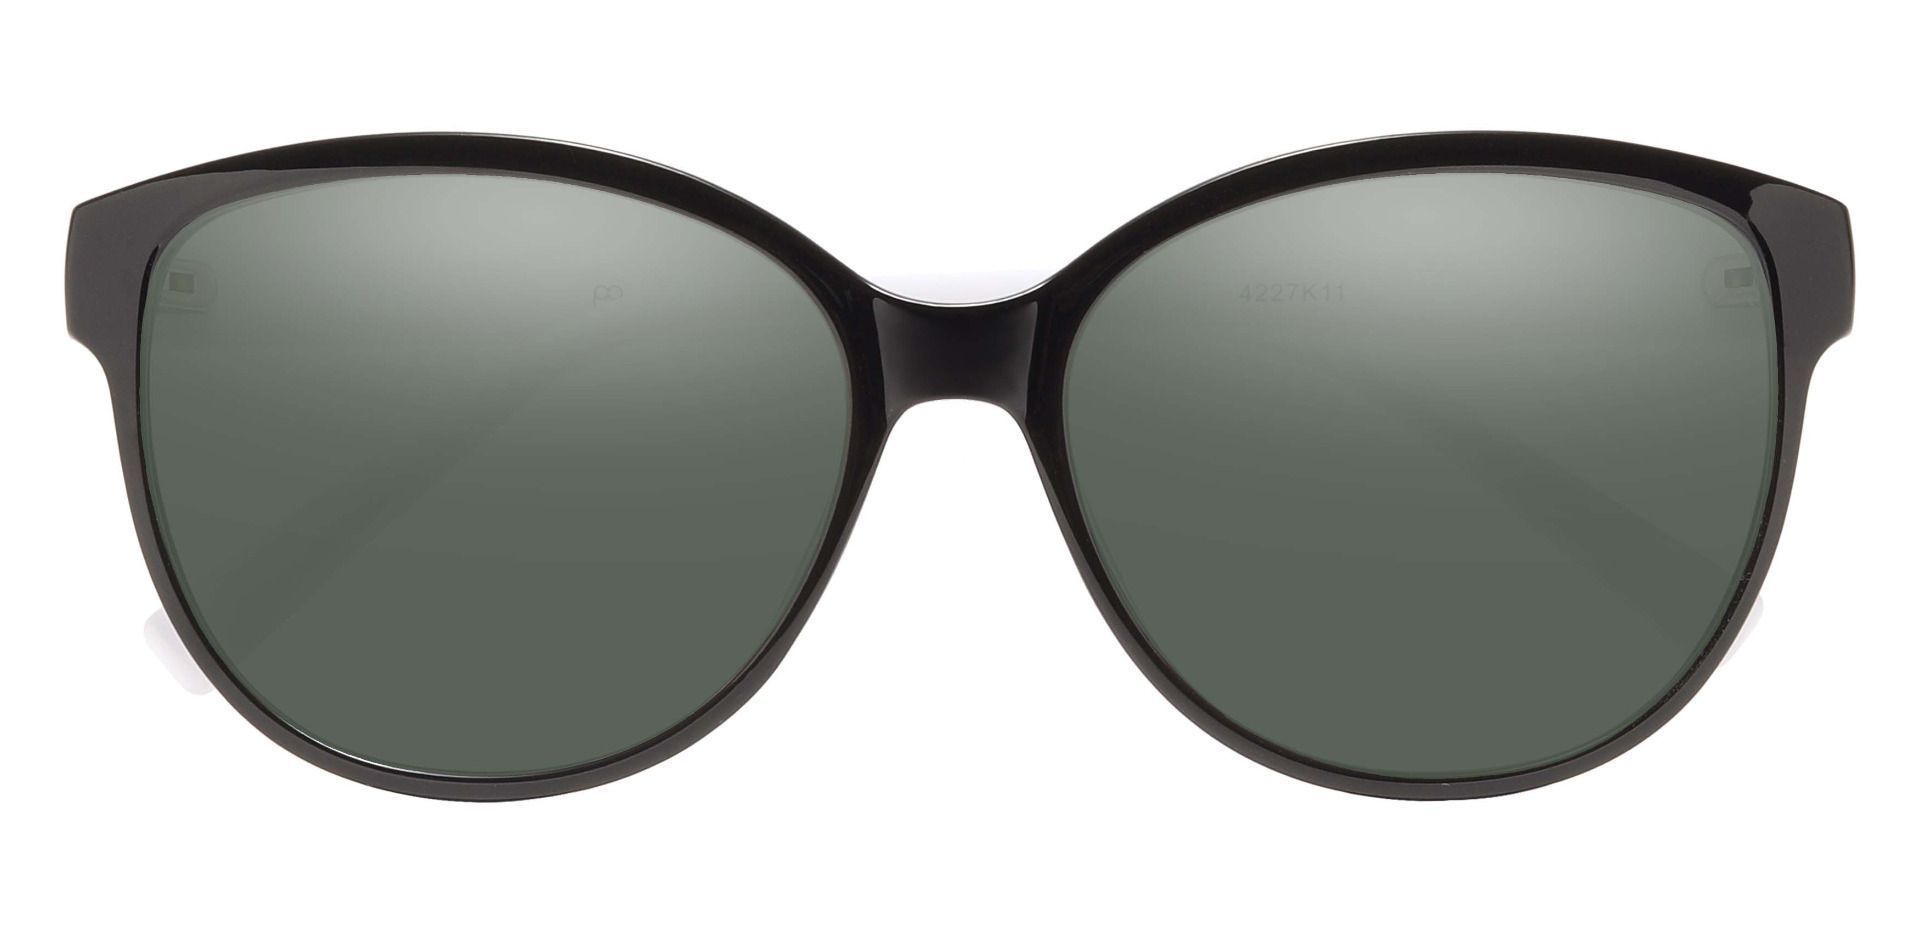 Rabia Oval Prescription Sunglasses - Black Frame With Green Lenses